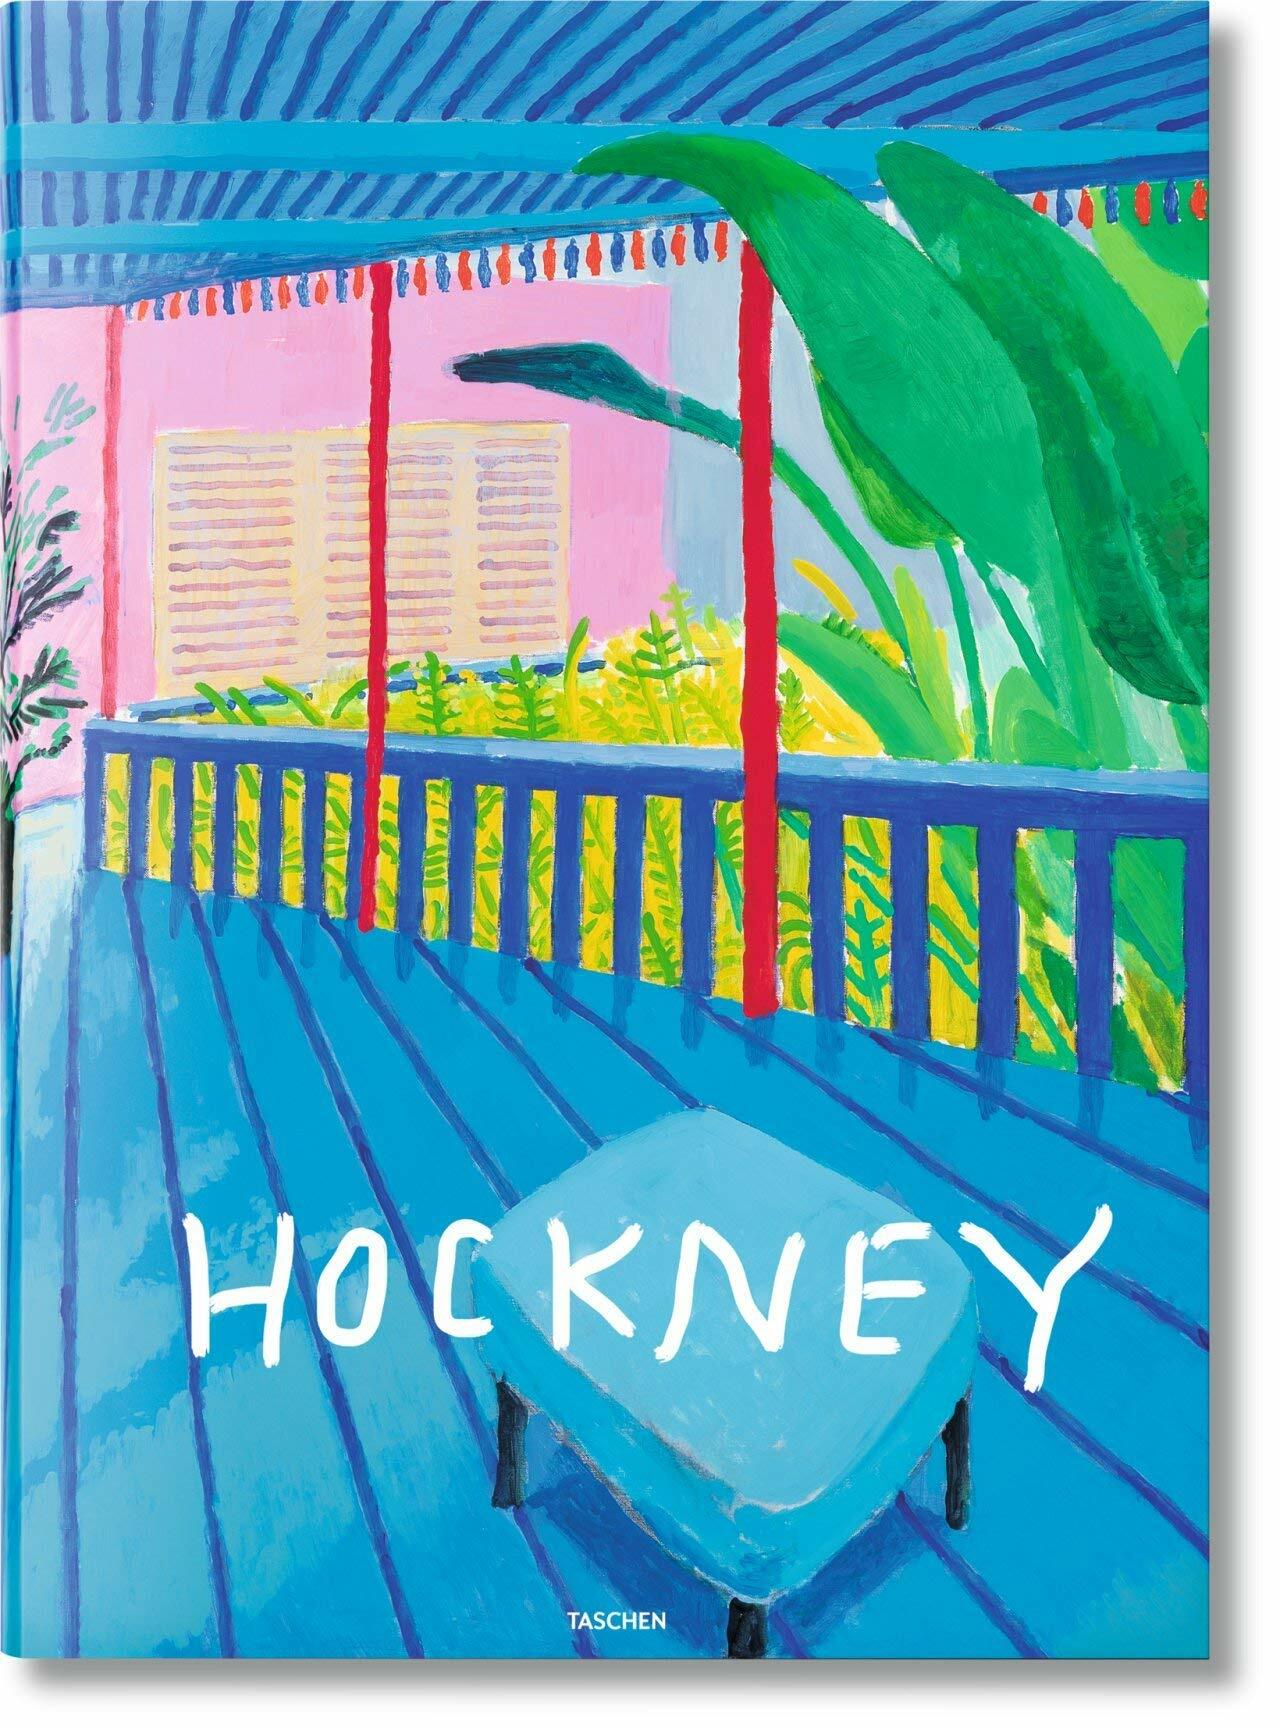 David Hockney: A Bigger Book (Hardcover, Taschens 25th Anniversary Ed)